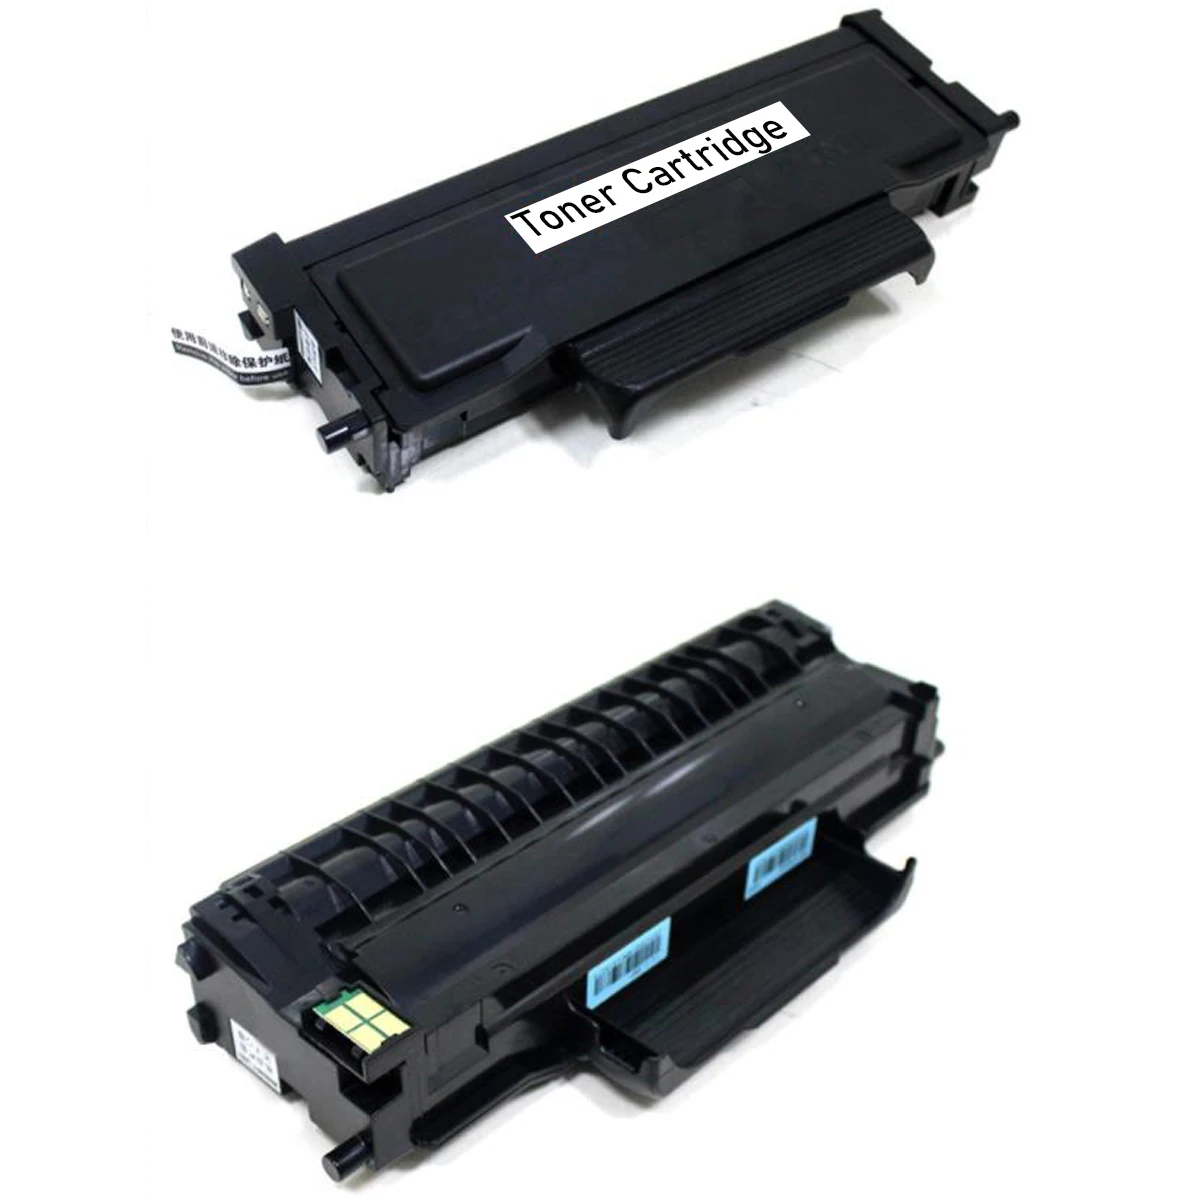 

Toner Cartridge for Pantum P-3012D M-7202FDN M-7202FDW M-7302FDN M-7302FDW P-3010D P-3010DW P-3010DN P-3300DN P-3300DW M-6700D